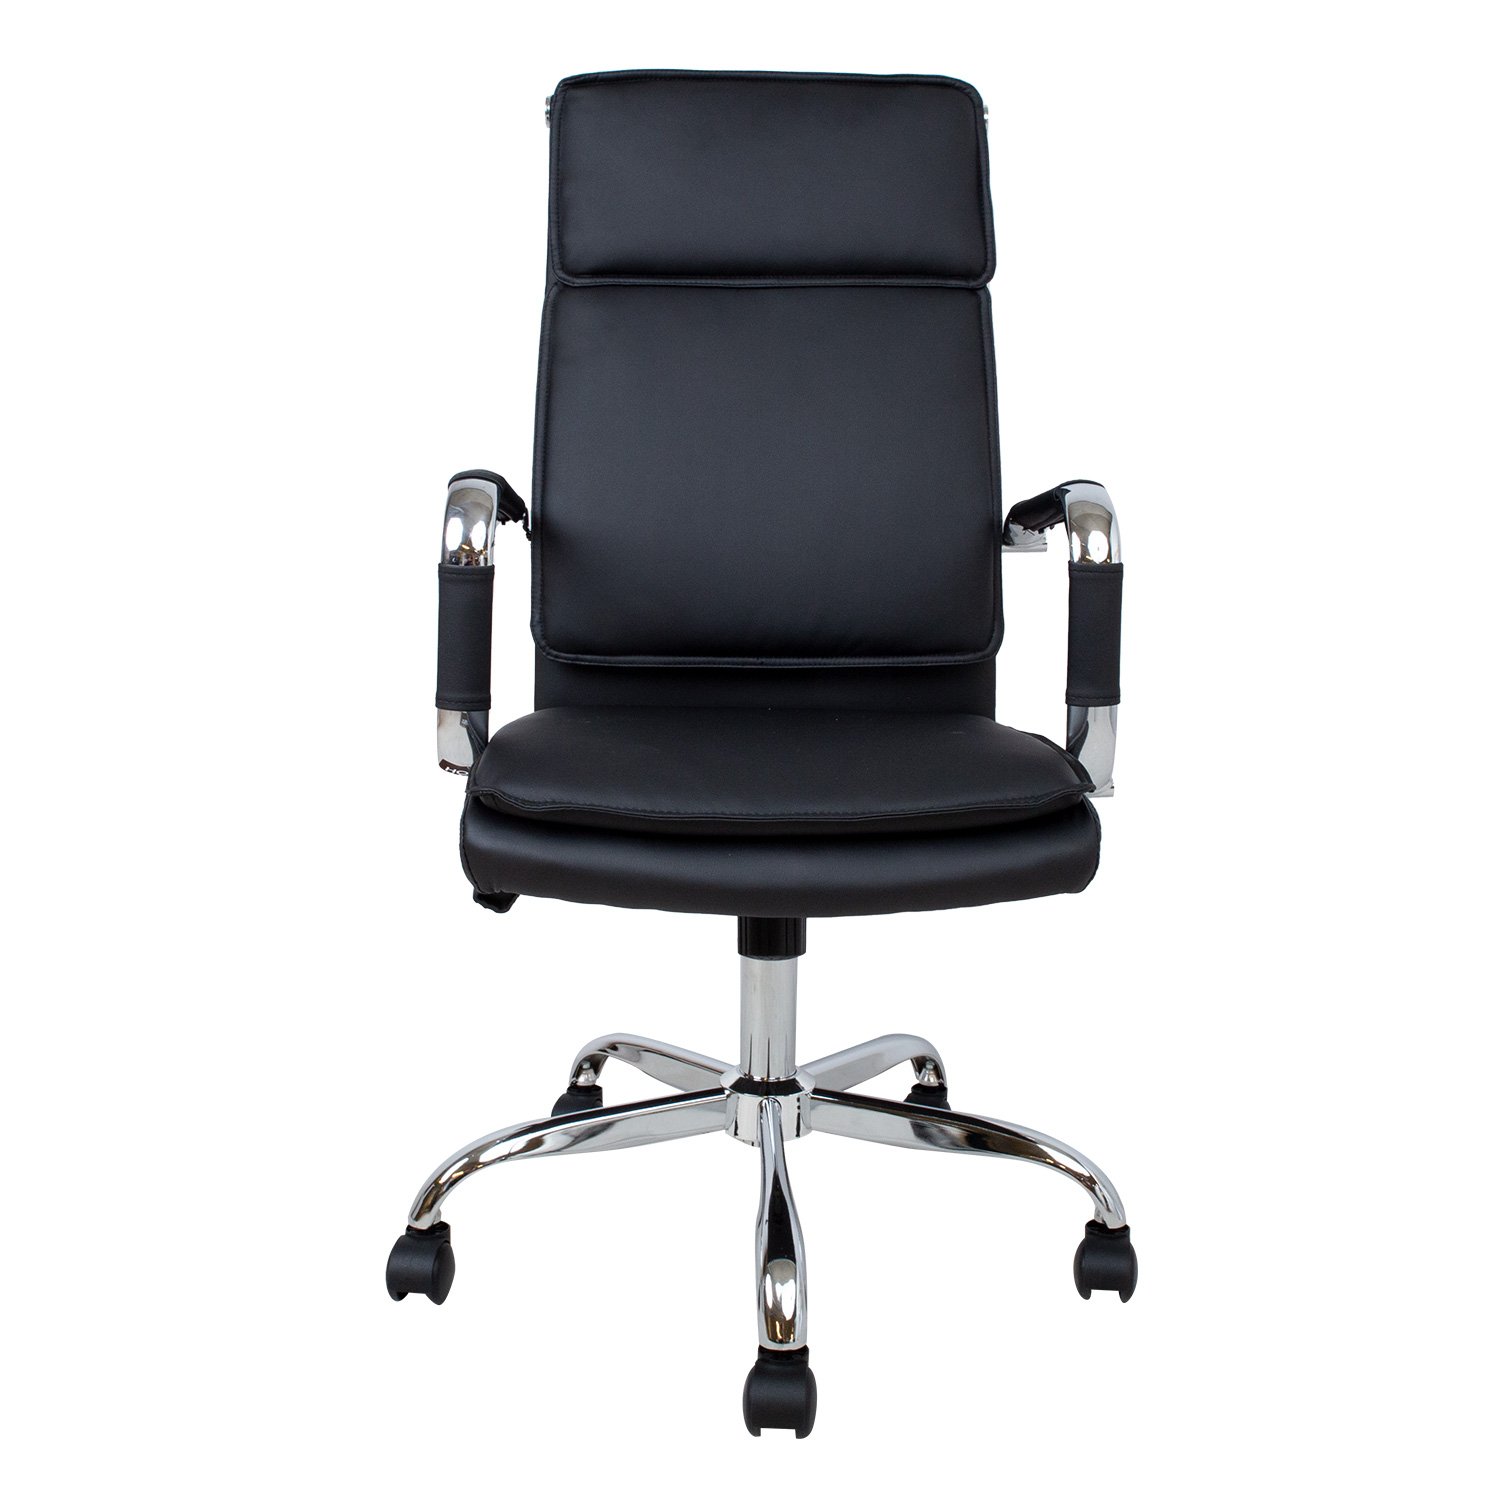 Biuro kėdė ULTRA, 54,5x60xH106,5-116,5 cm, juoda - 2